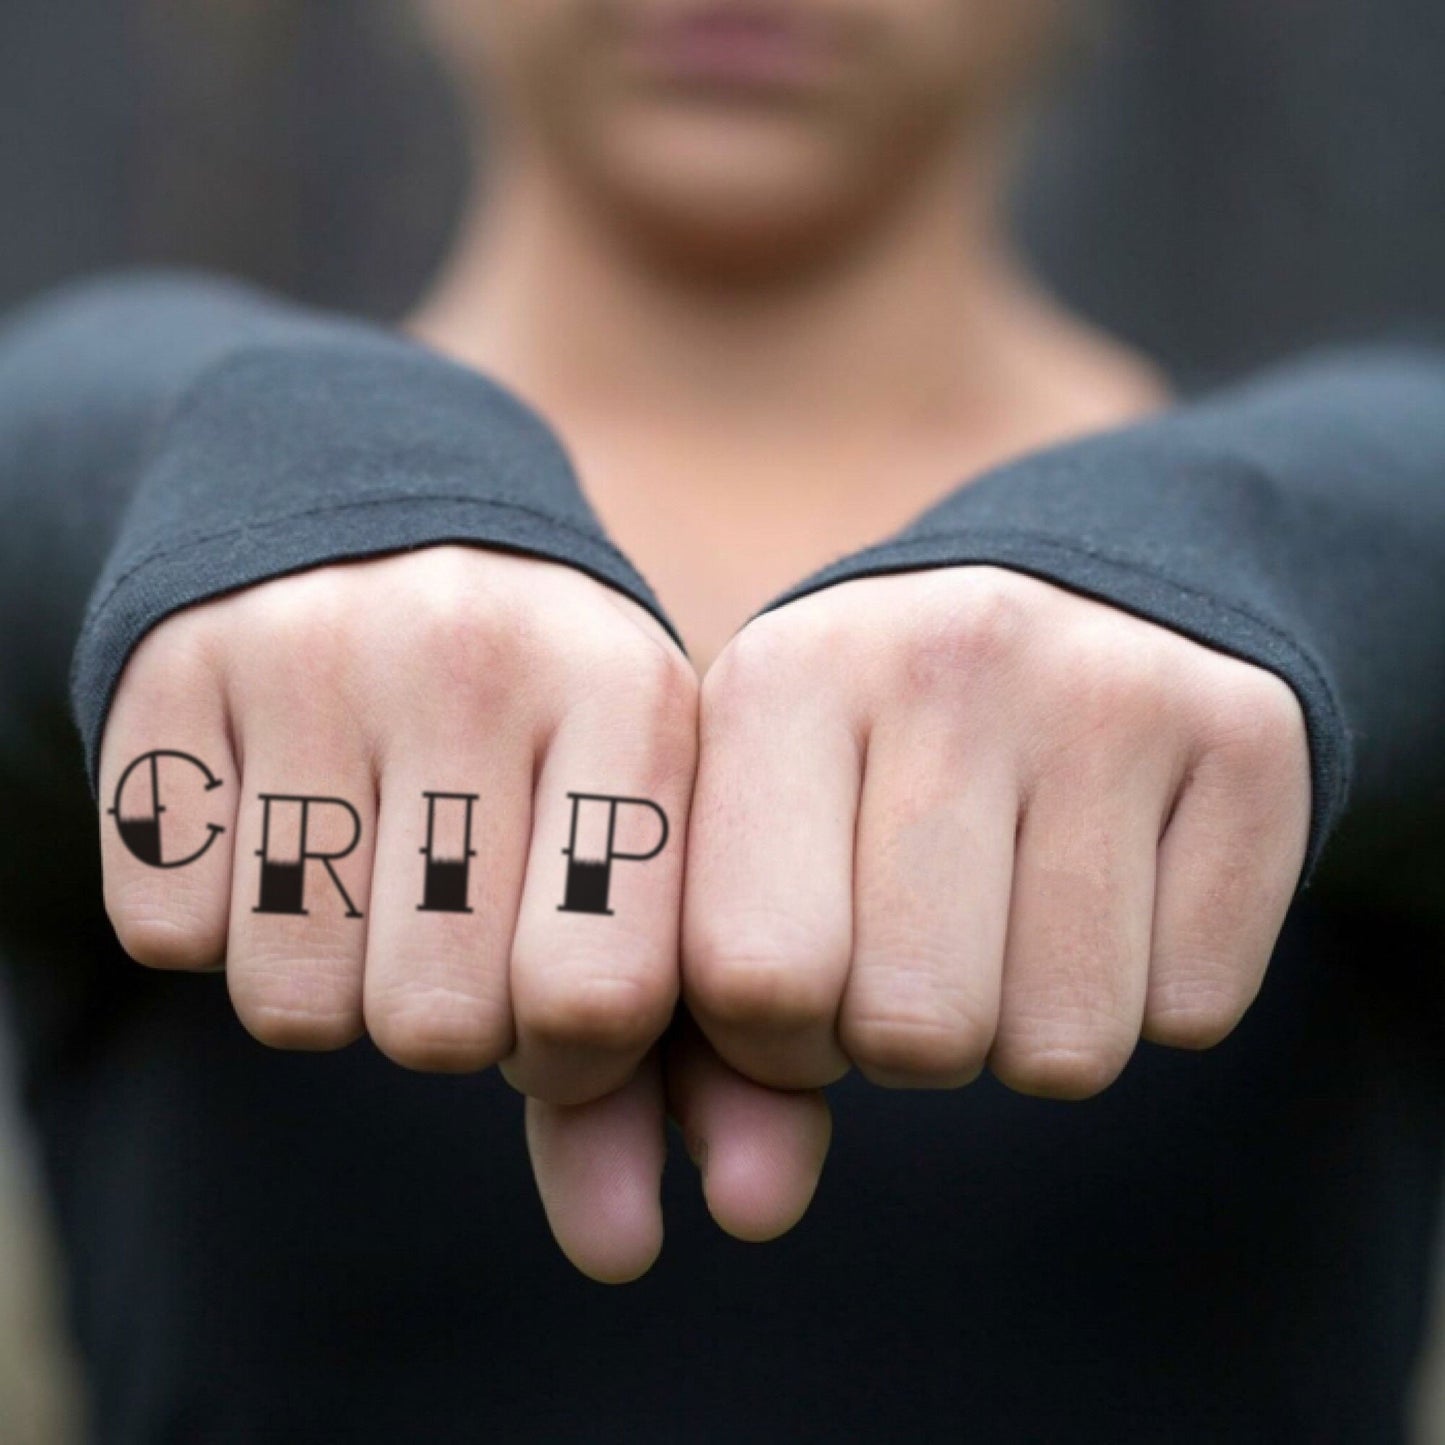 fake small crip gang member related four letter words lettering temporary tattoo sticker design idea on finger